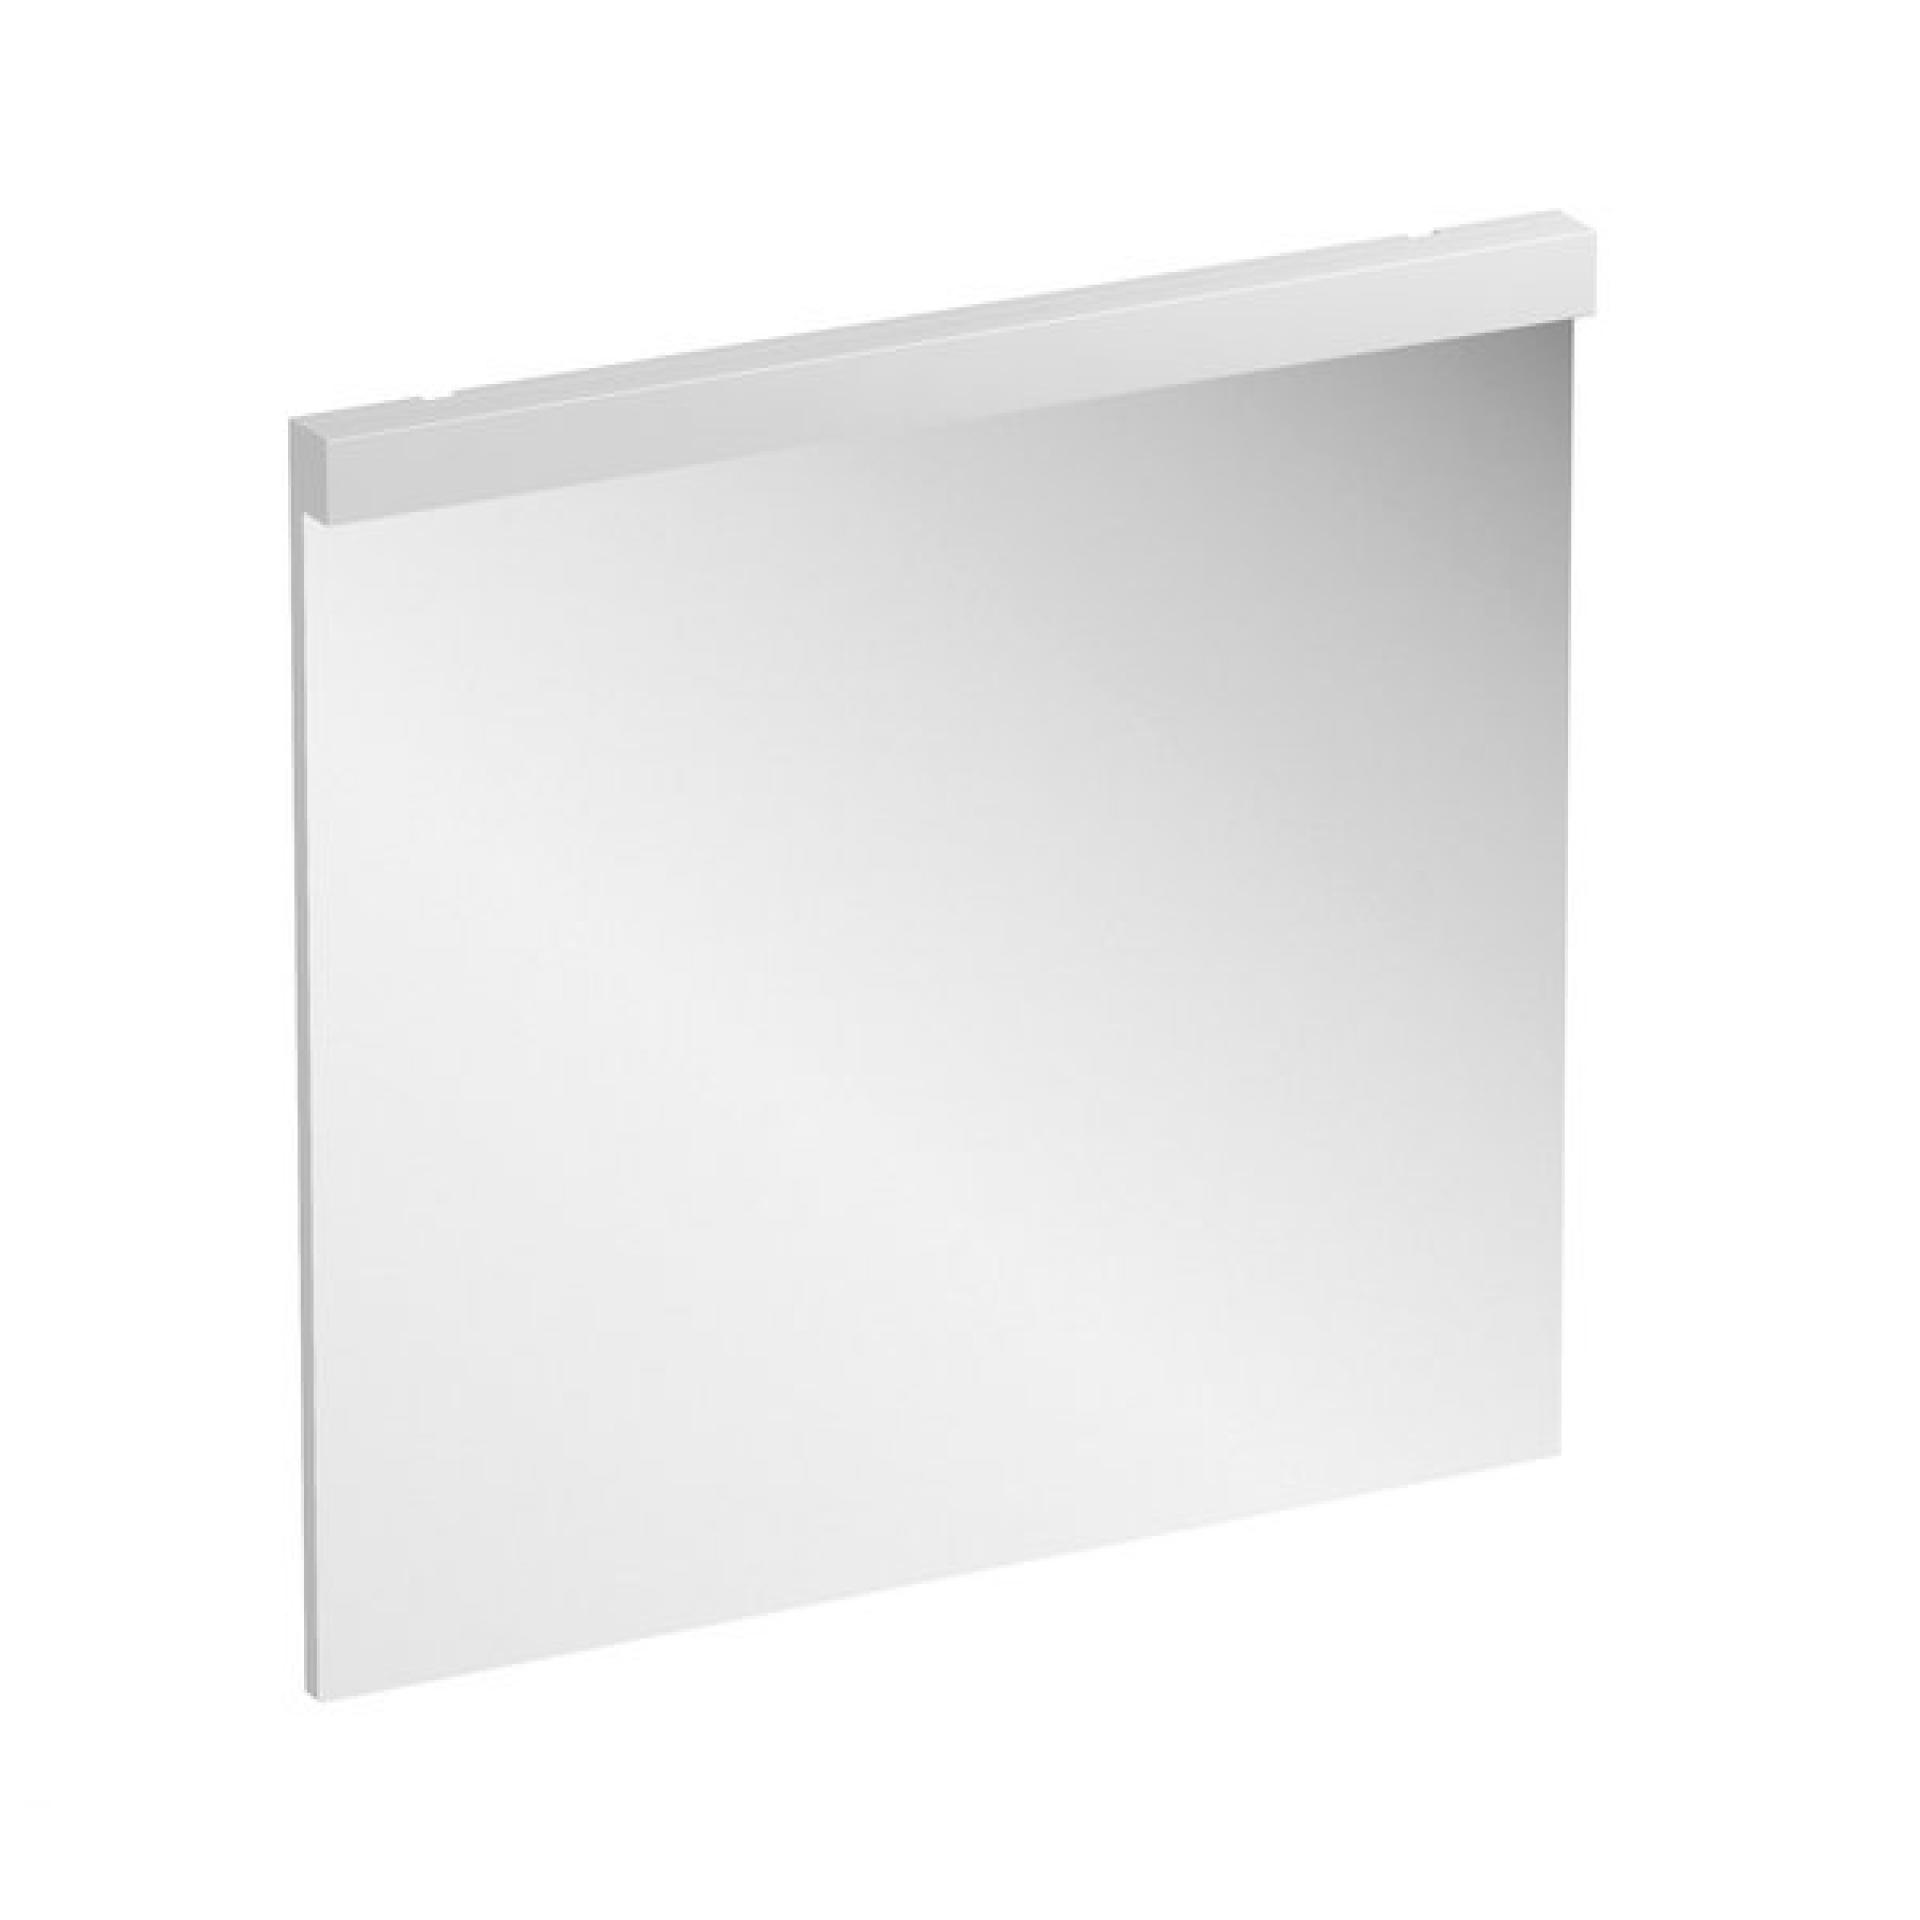 Зеркало 120 см Ravak Natural X000001058, белый